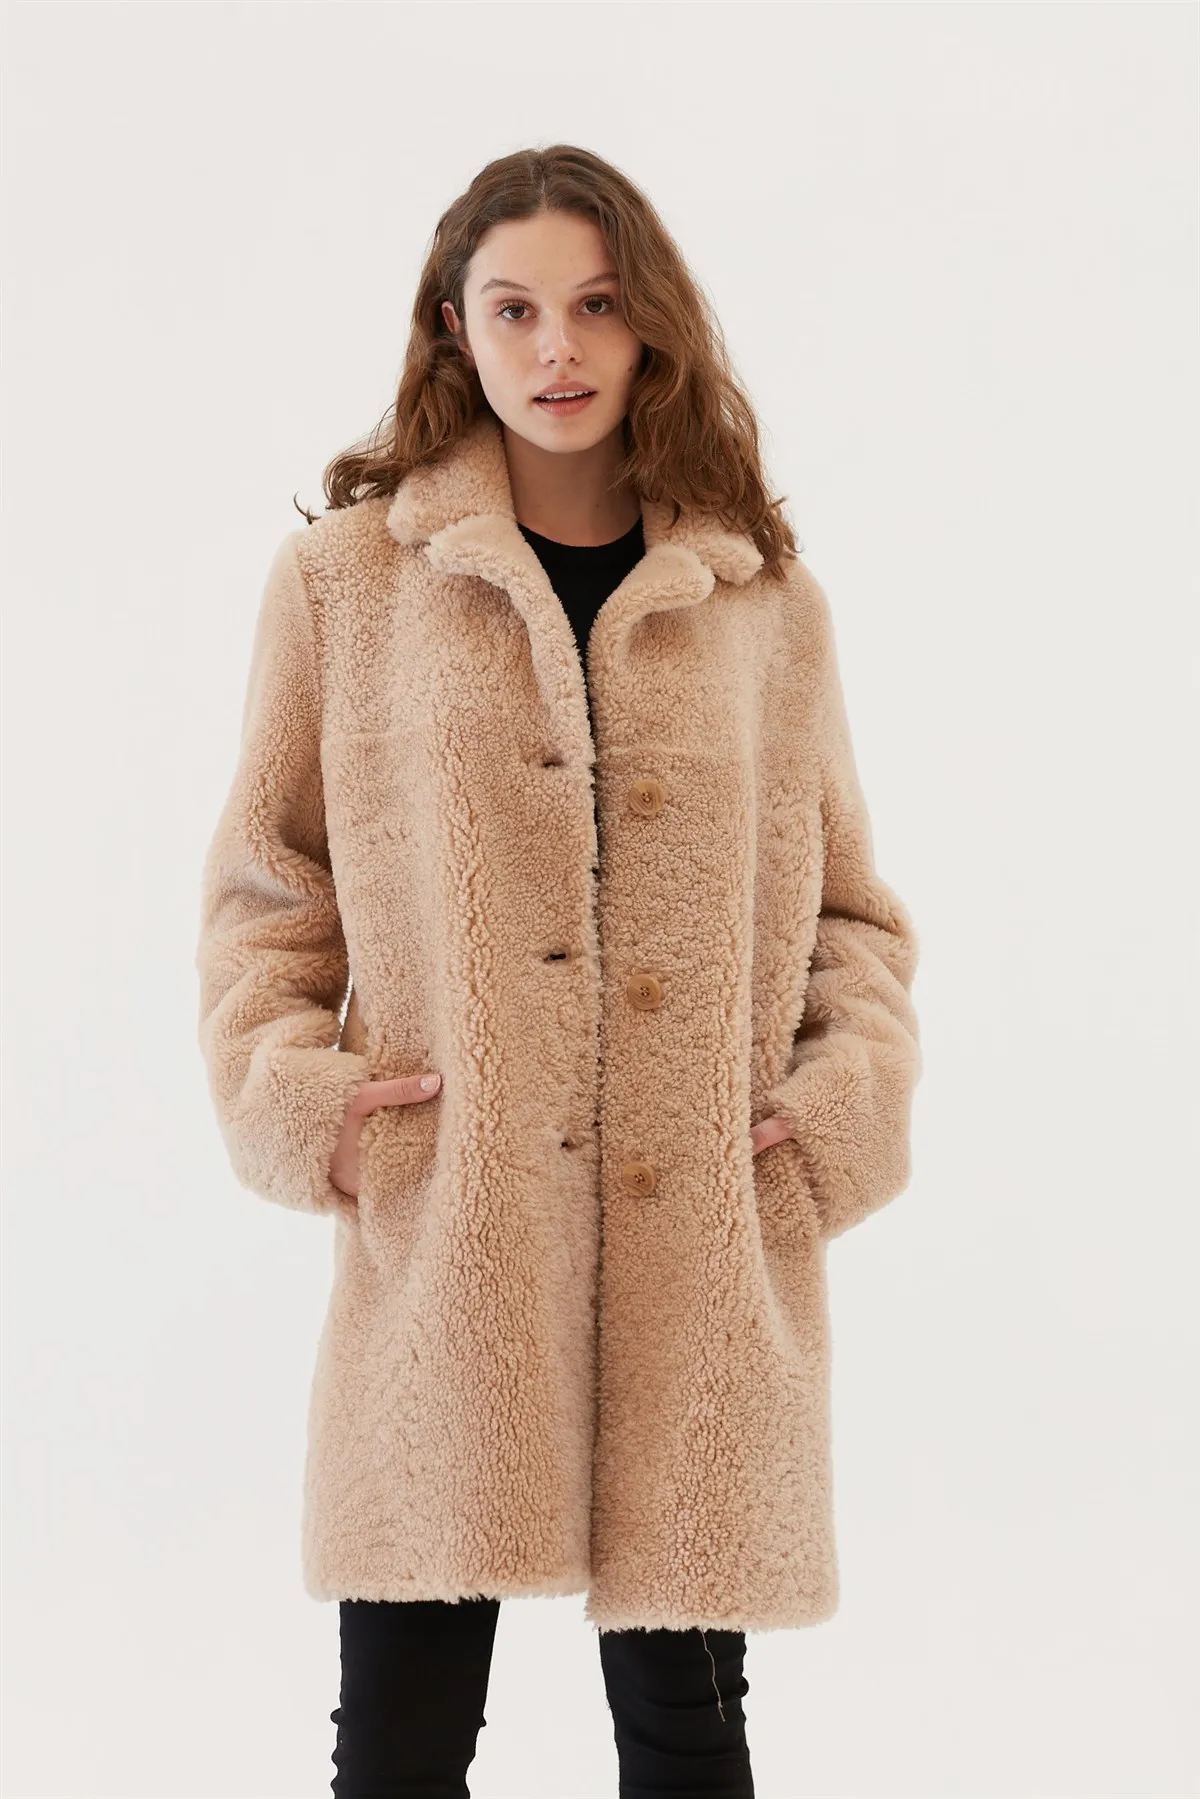 Women's Fur coat Genuine Leather Jacket Winter Warm Coat New Season Design Clothing Products Classic Plush Soft Coat Womens Leather